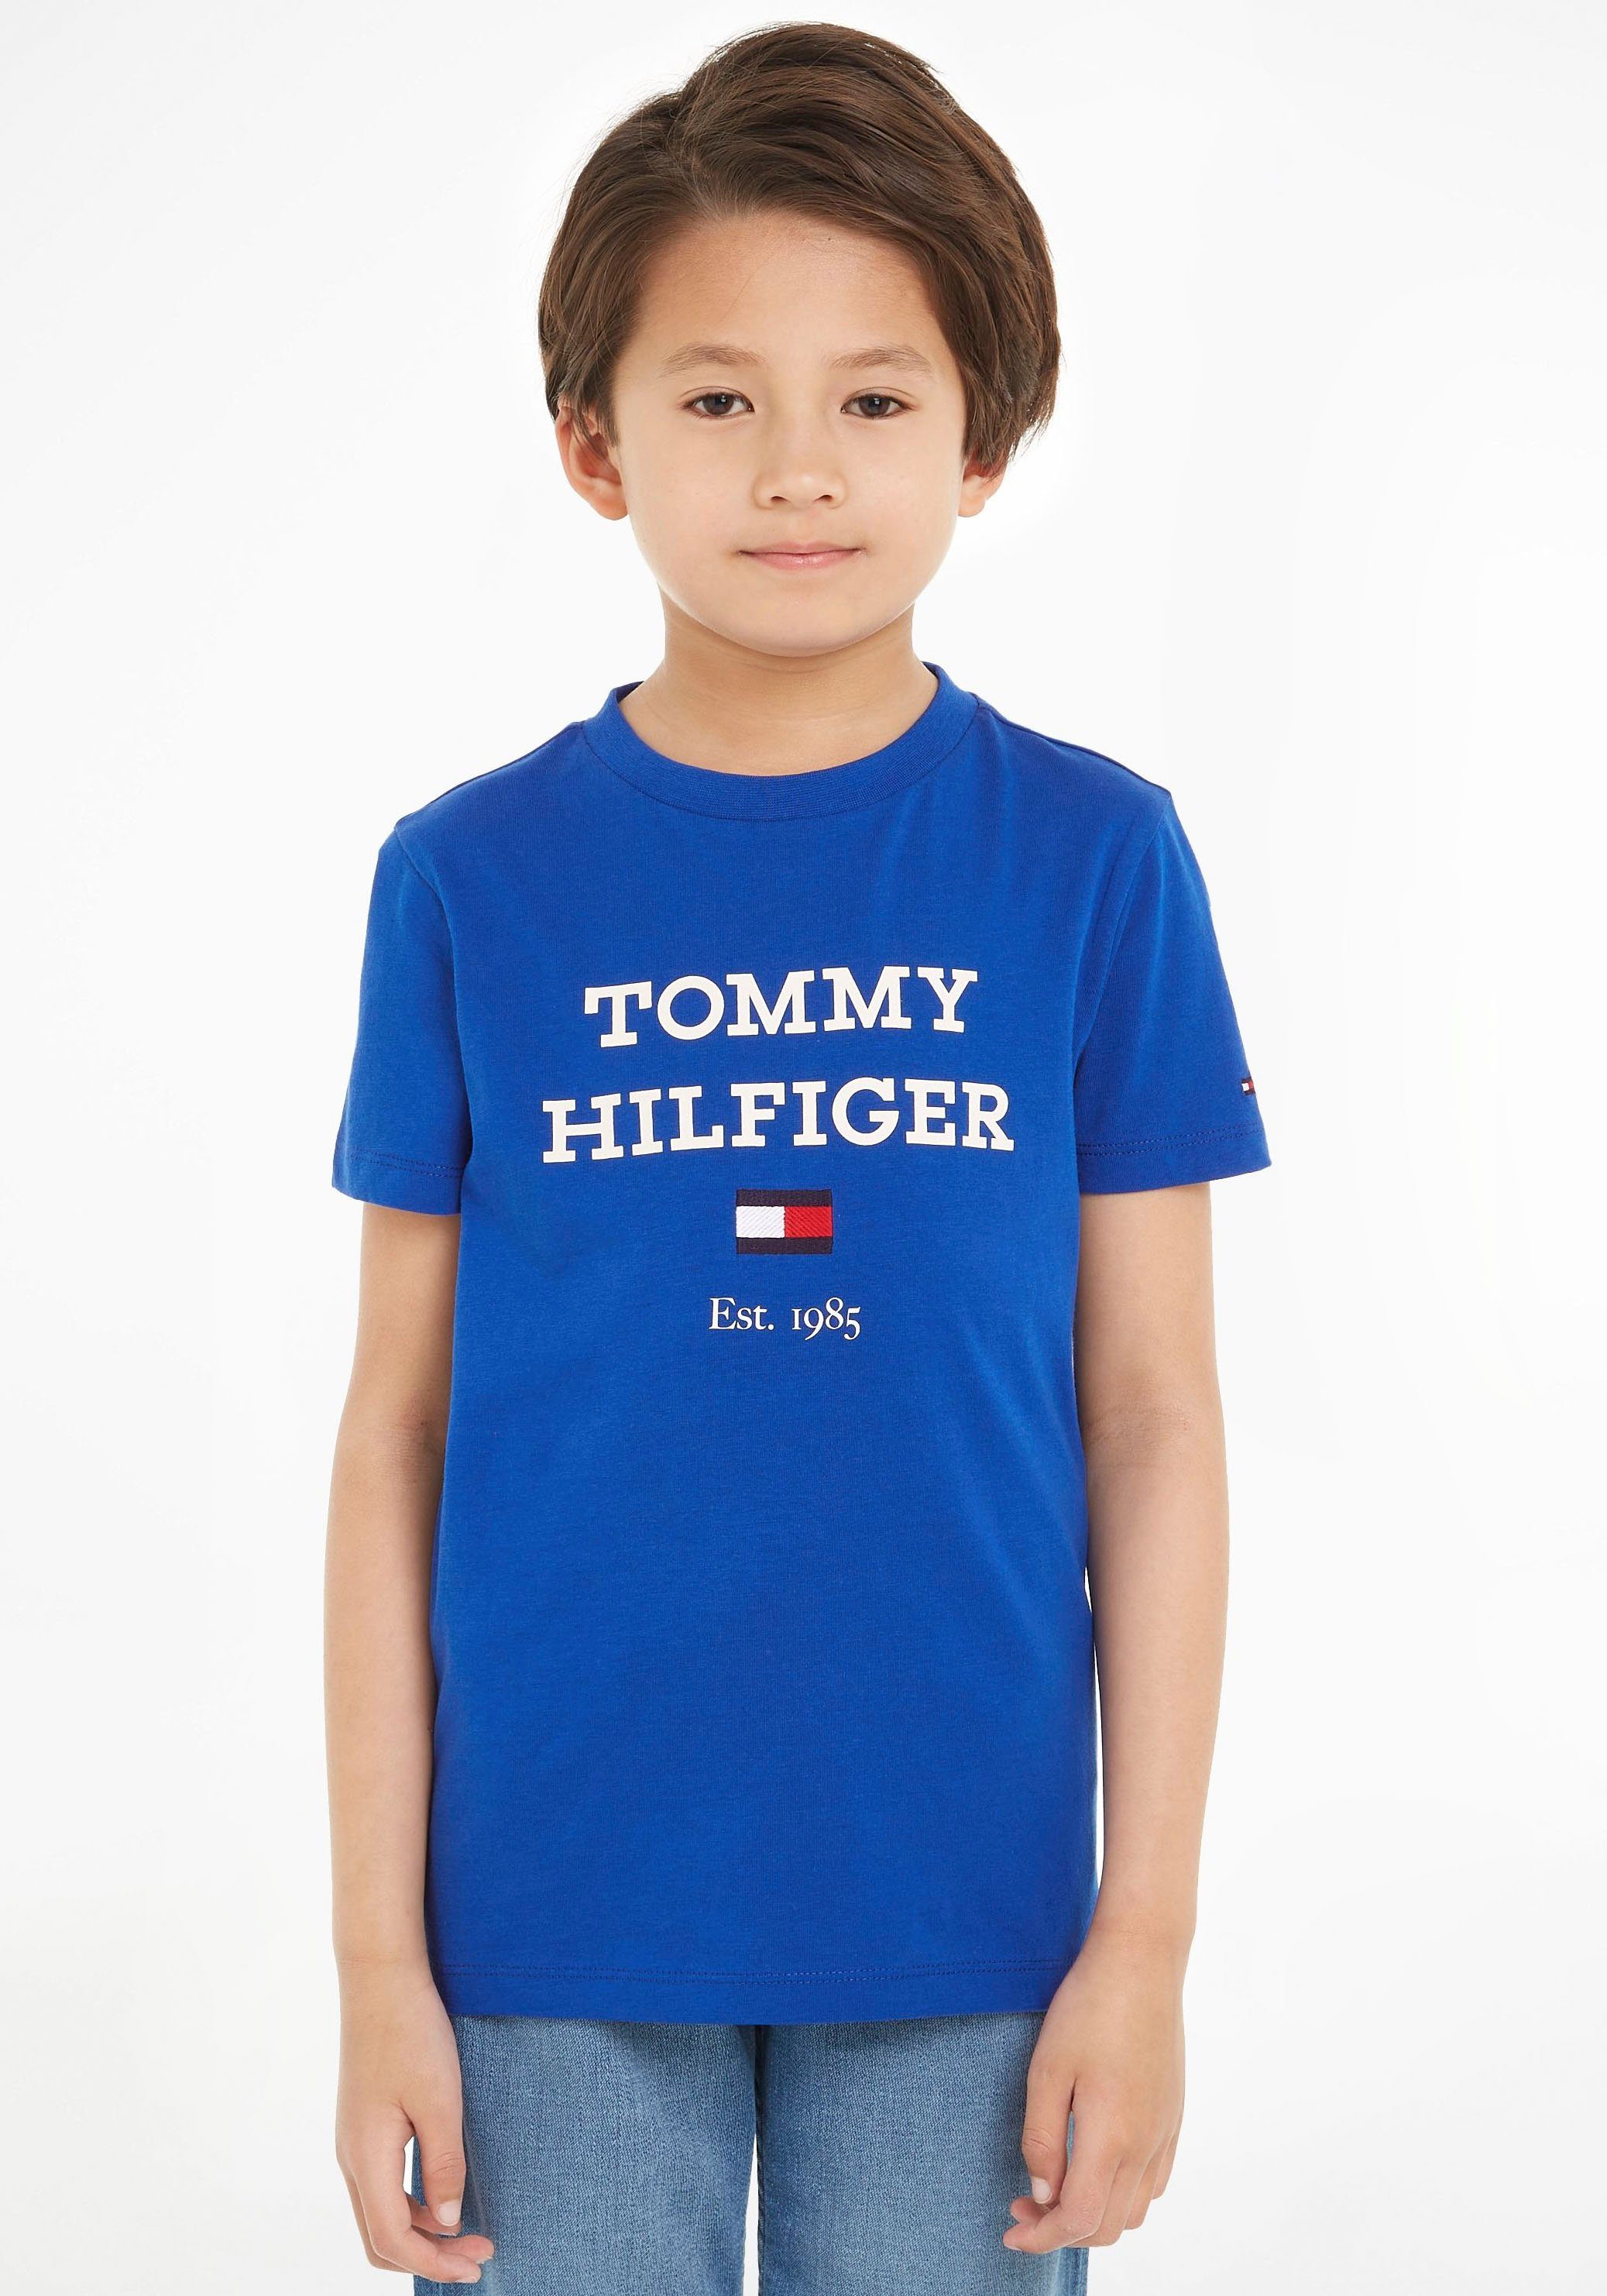 T-Shirt S/S LOGO Tommy mit großem Logoschriftzug TH Hilfiger TEE